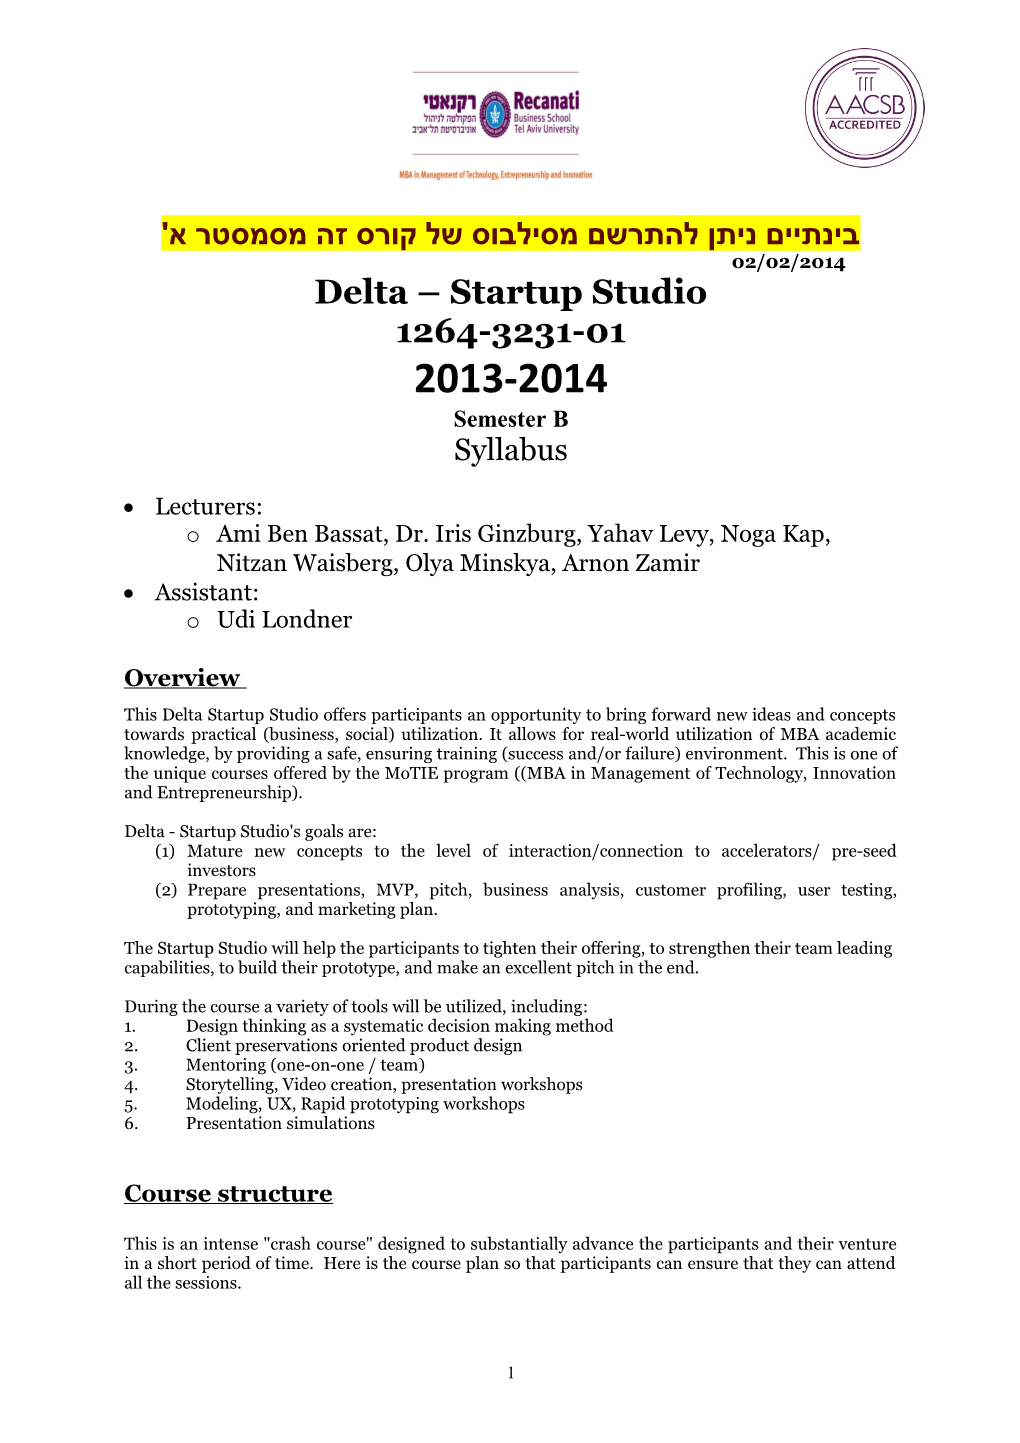 Delta Startup Studio